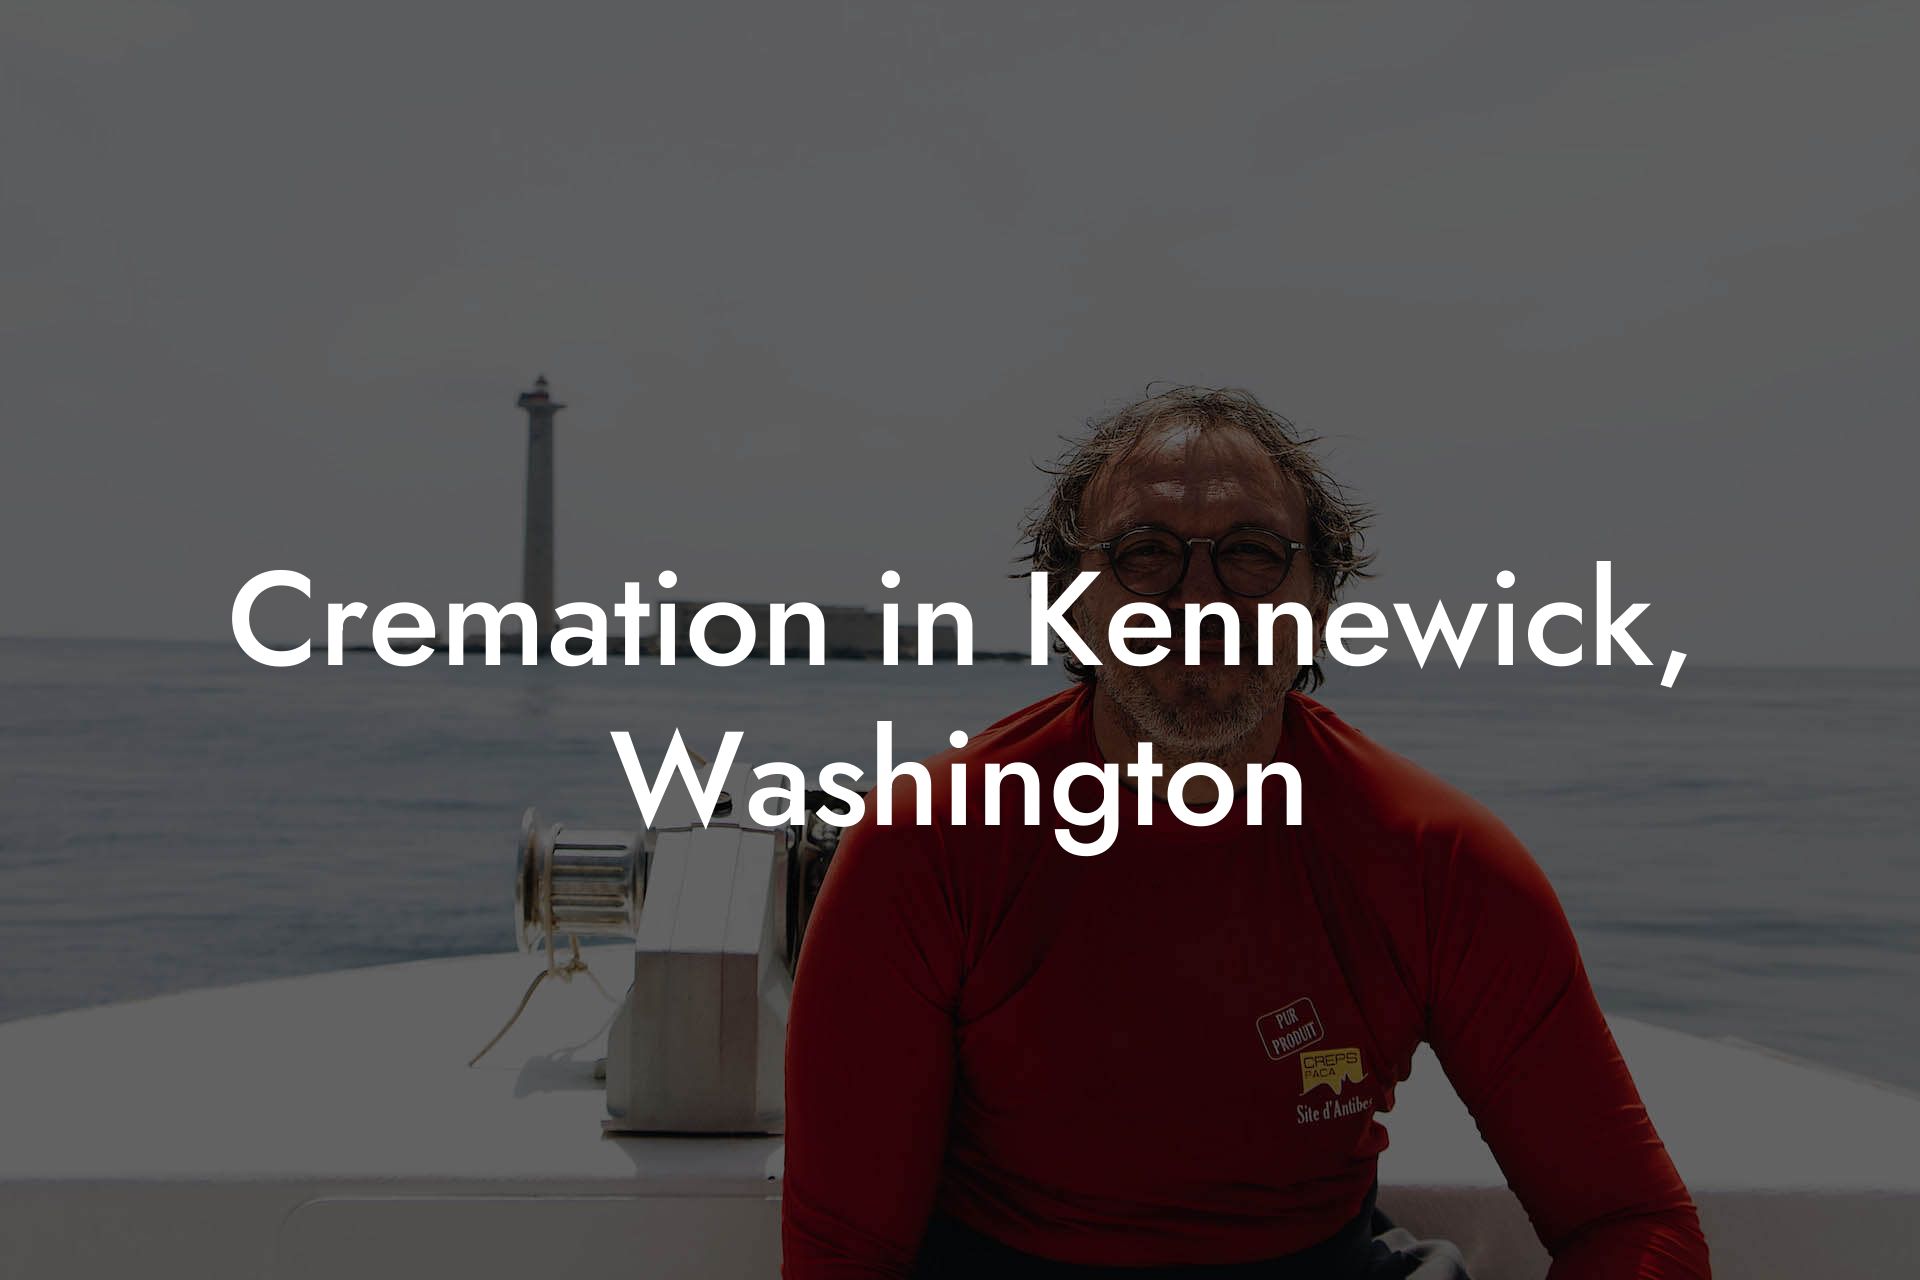 Cremation in Kennewick, Washington